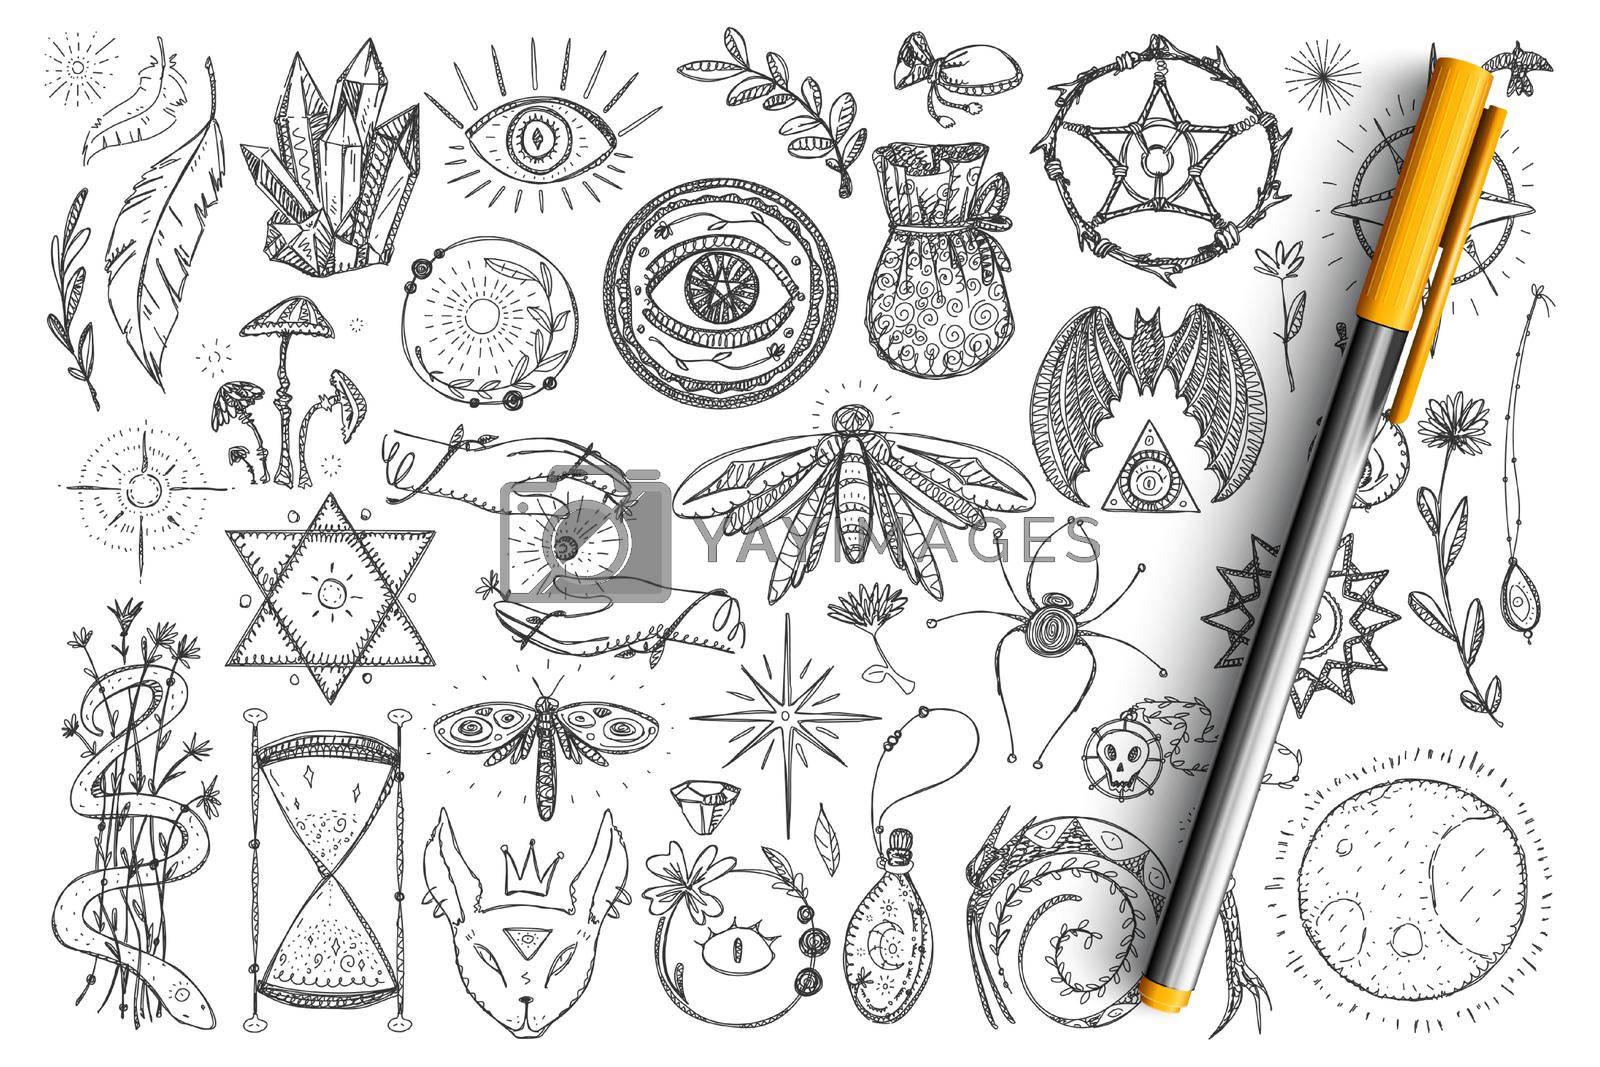 Royalty free image of Magic and occult symbols doodle set by Vasilyeva